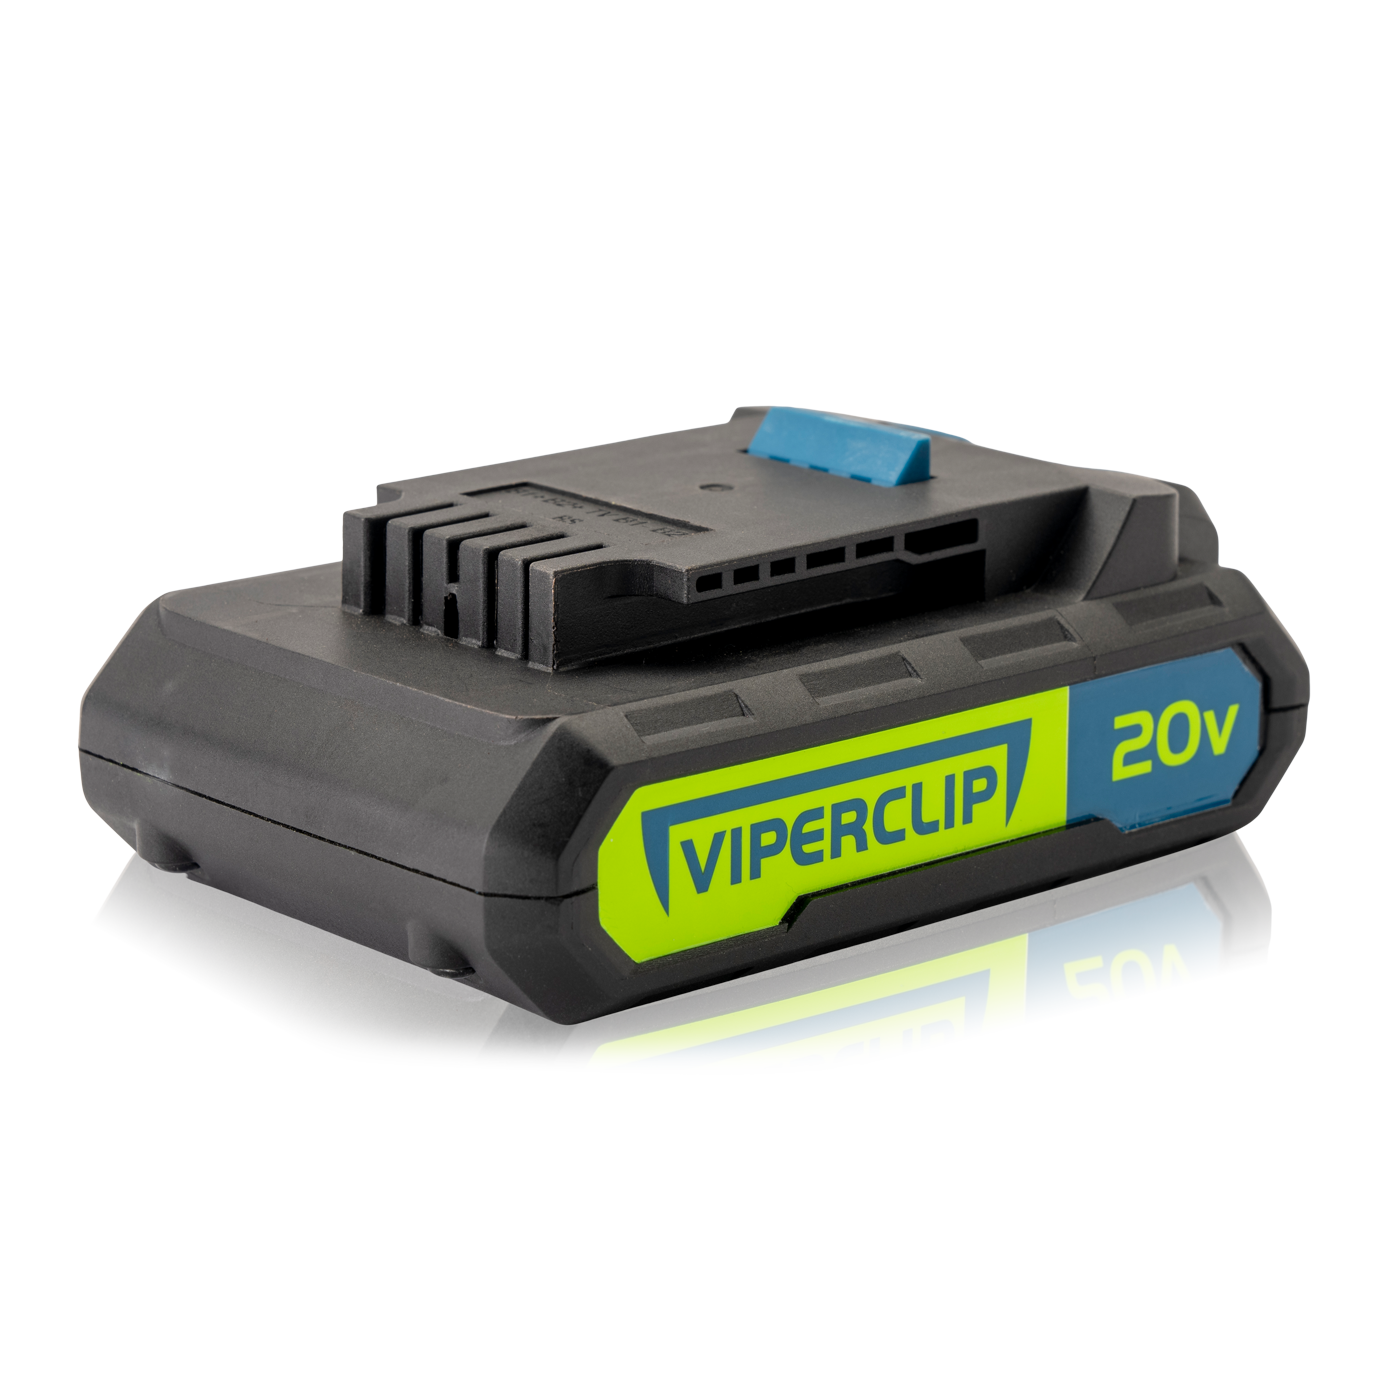 ViperClip Battery Pack 2ah